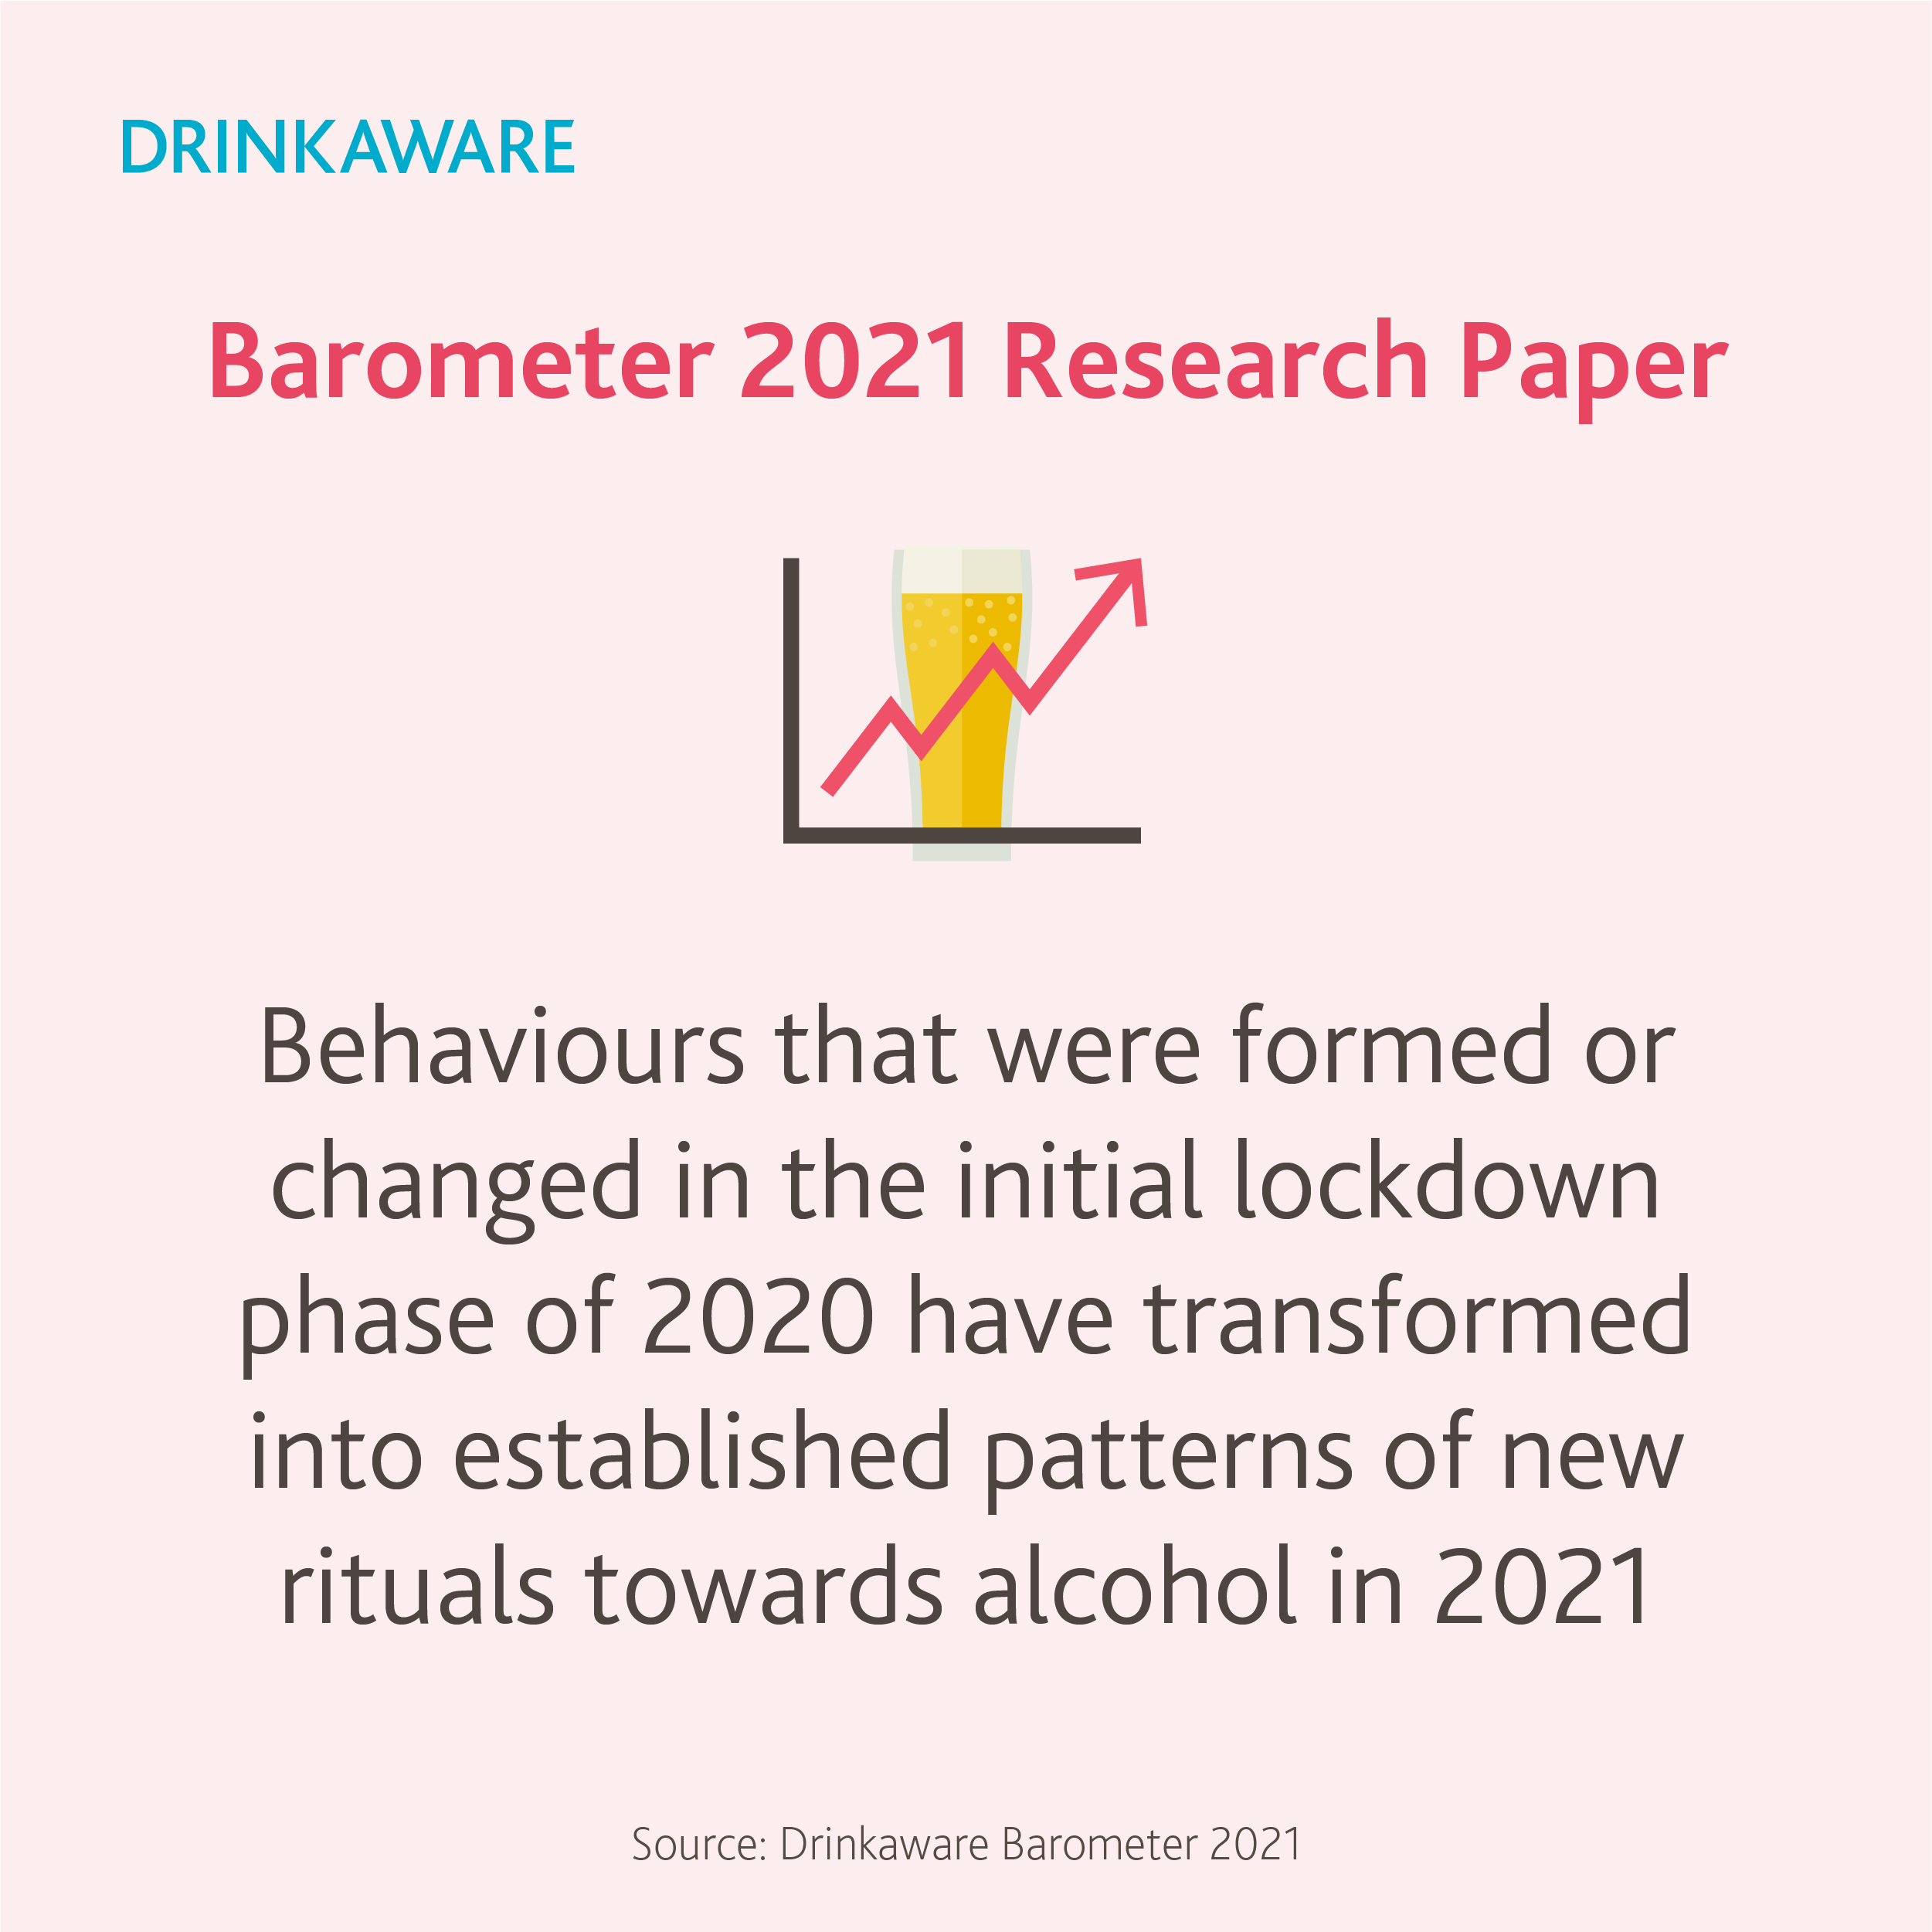 Barometer Research Paper